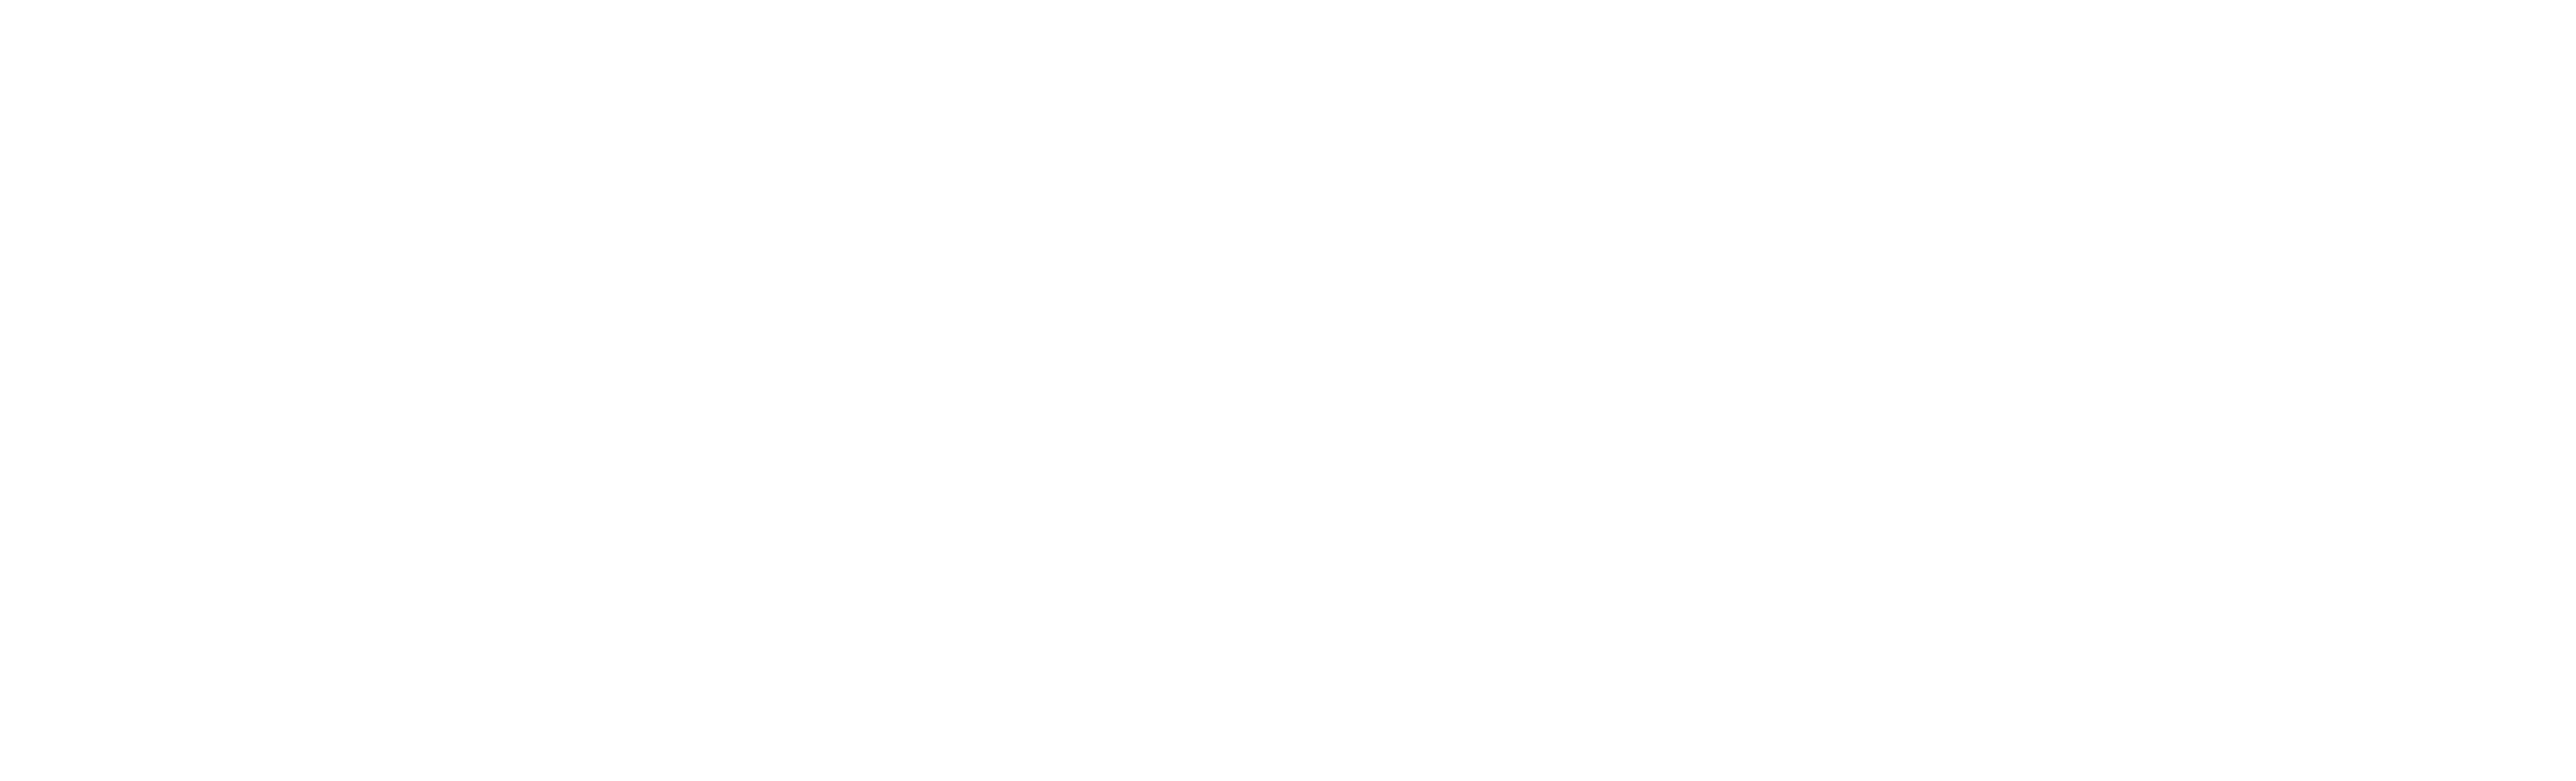 PEMSEA white